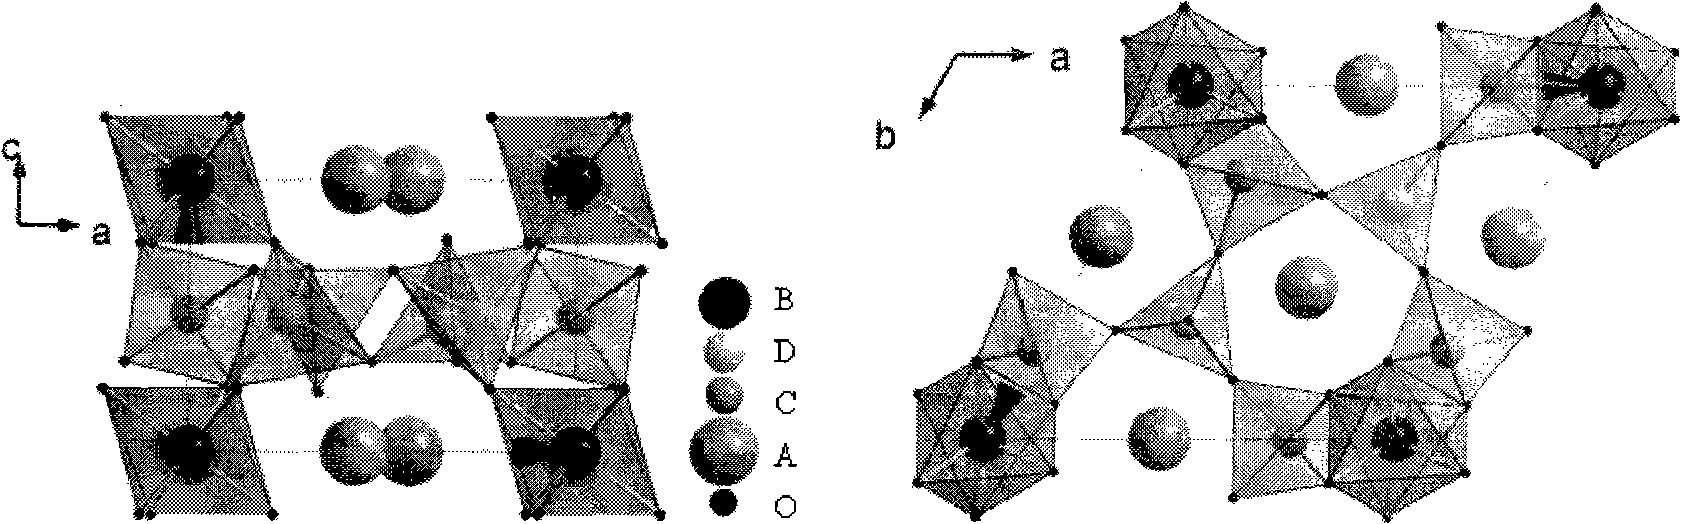 Piezo crystal having four-lattice structure